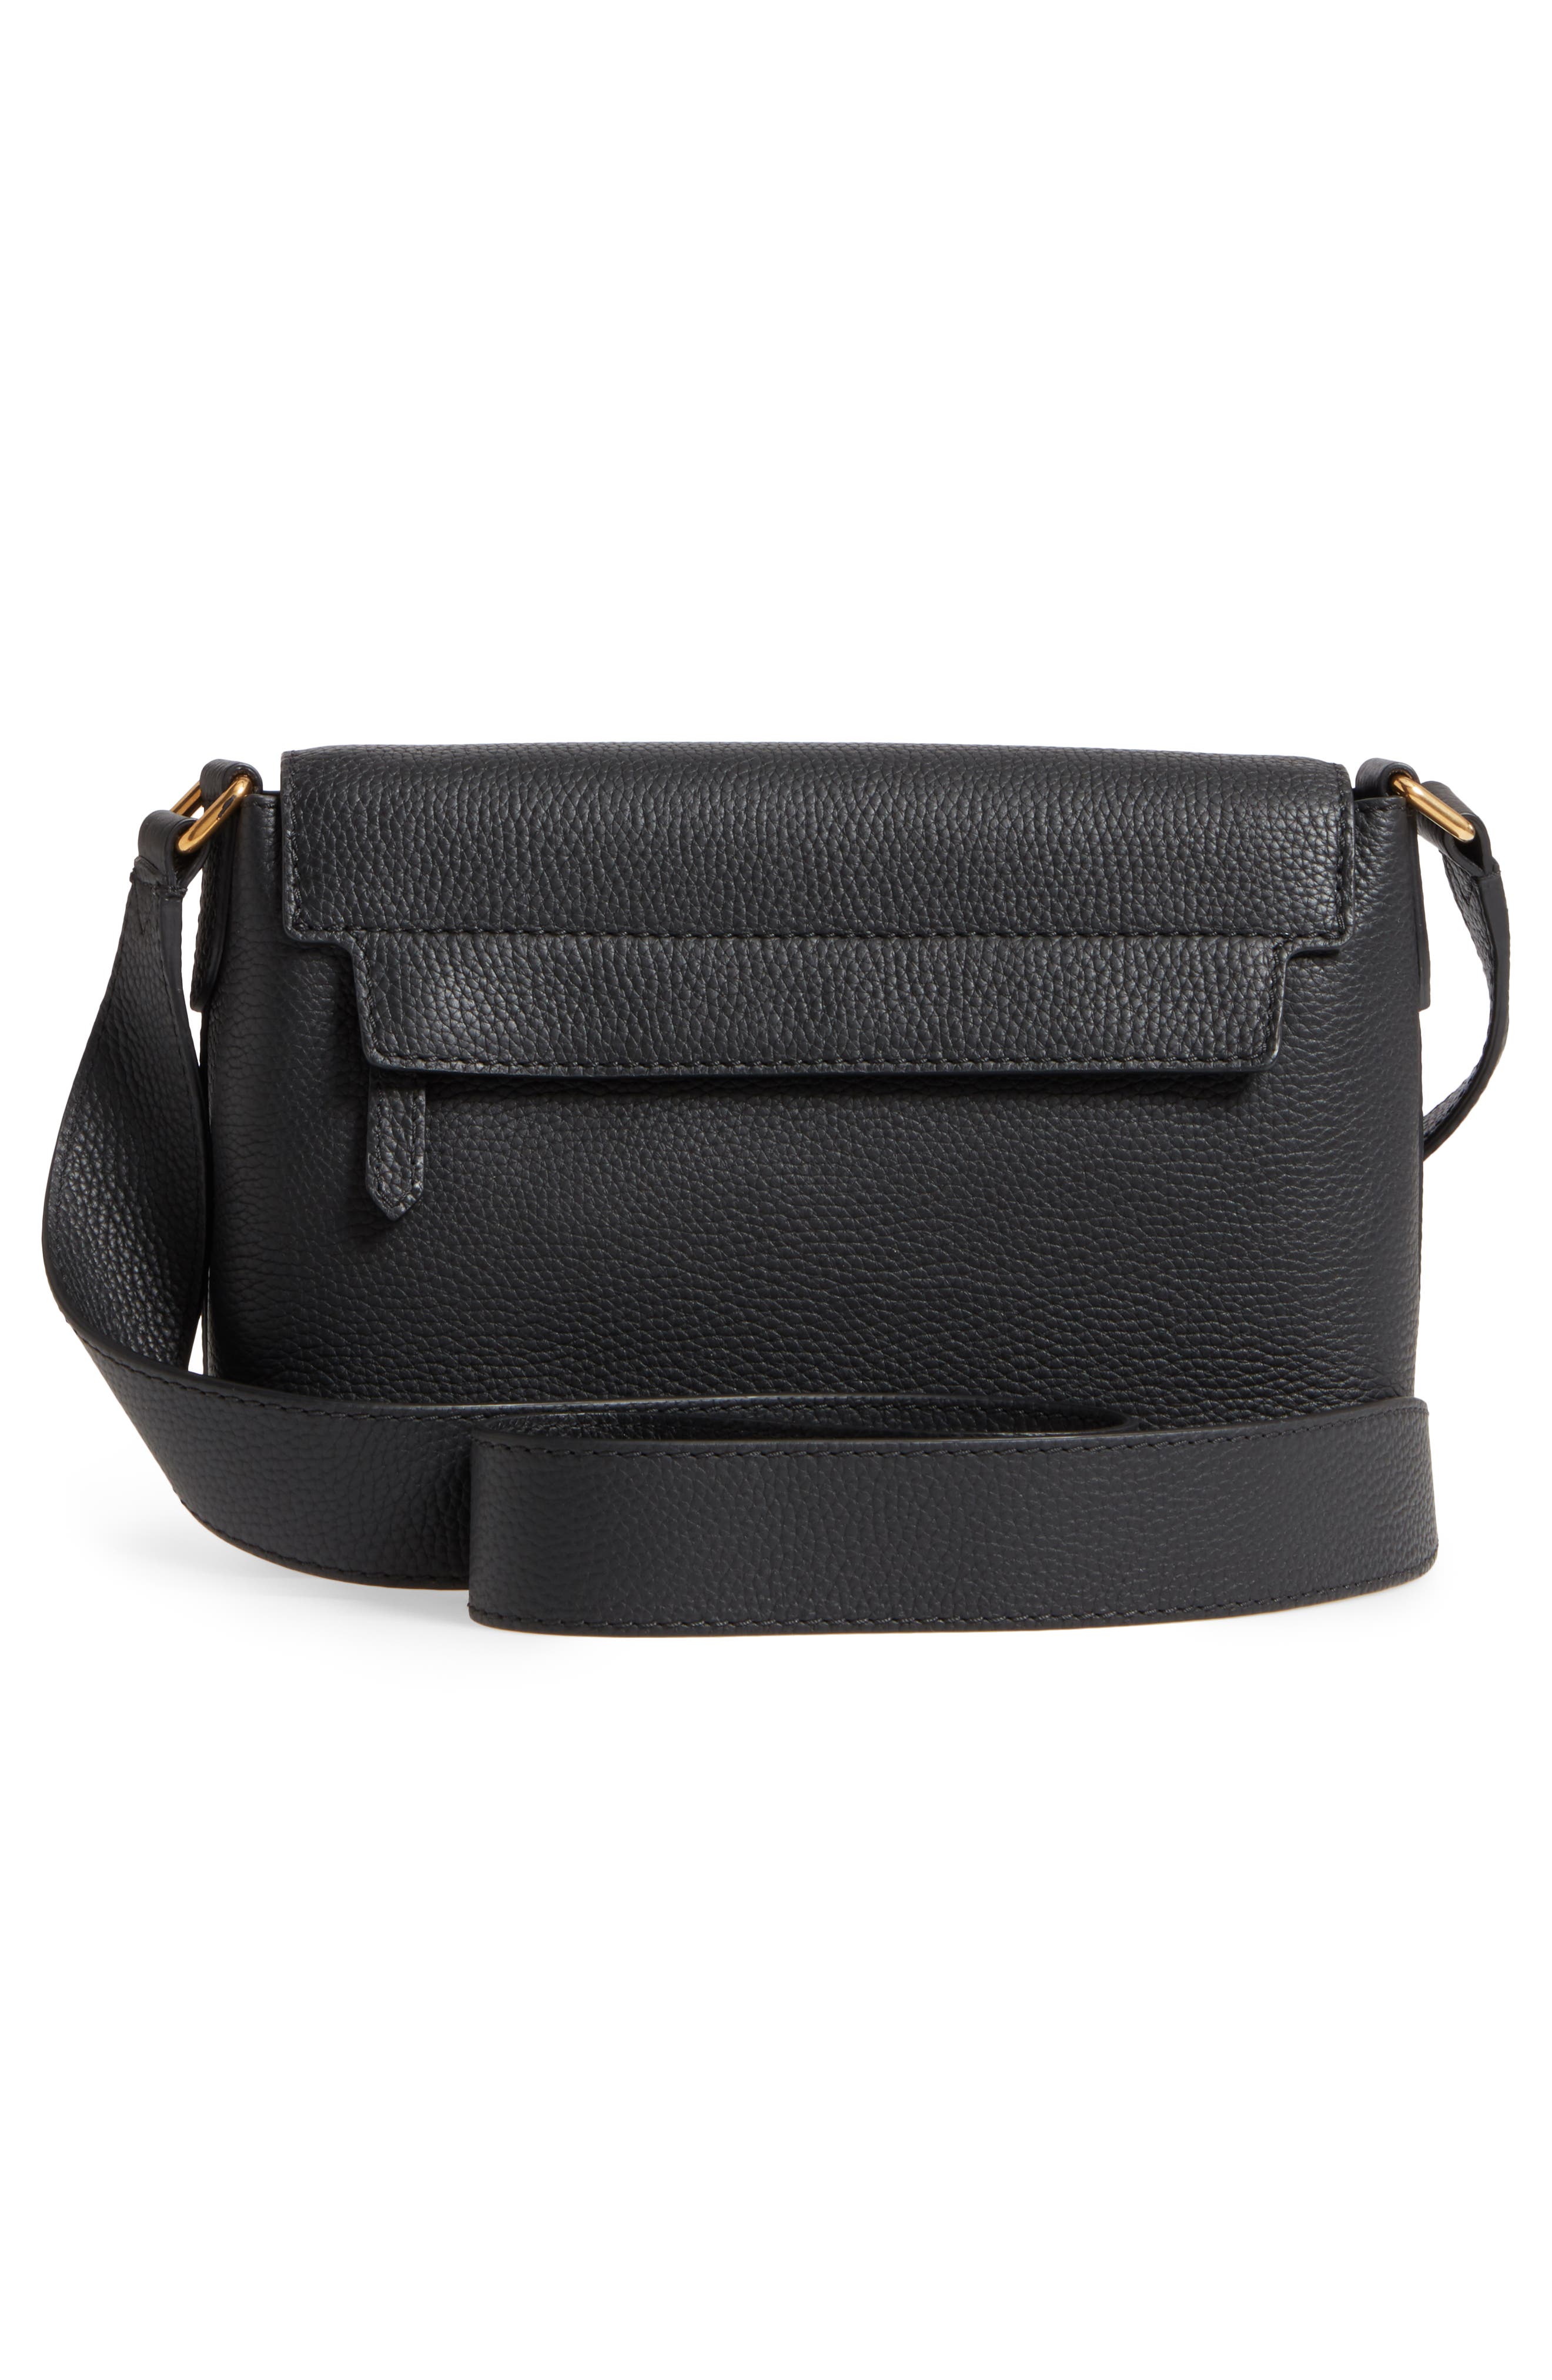 BURBERRY Burleigh Small Soft Leather Crossbody Bag, Black | ModeSens